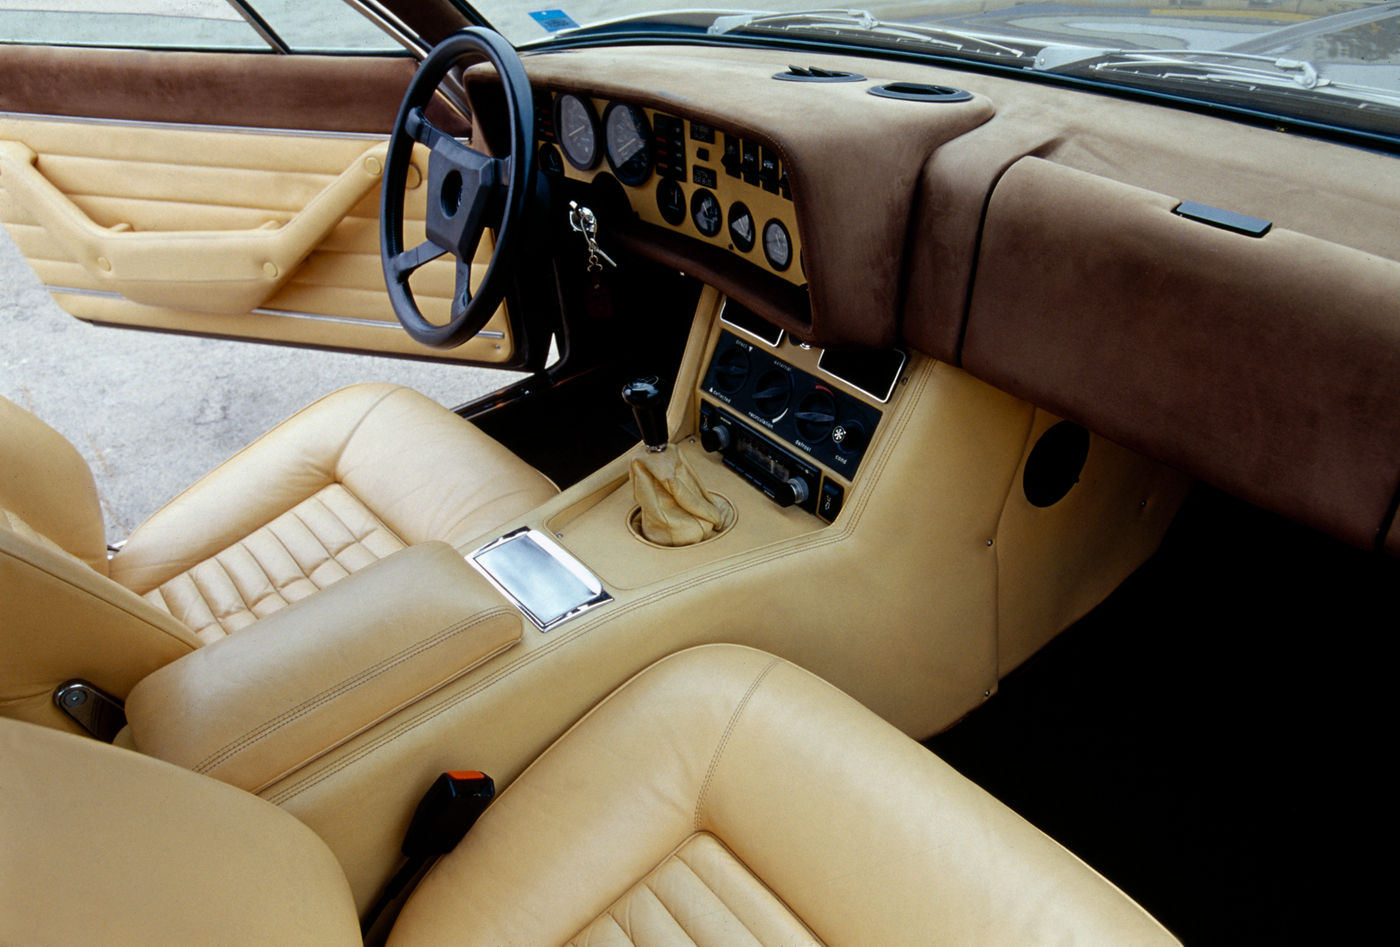 1976 Maserati Kyalami - interior view of the classic sports car model